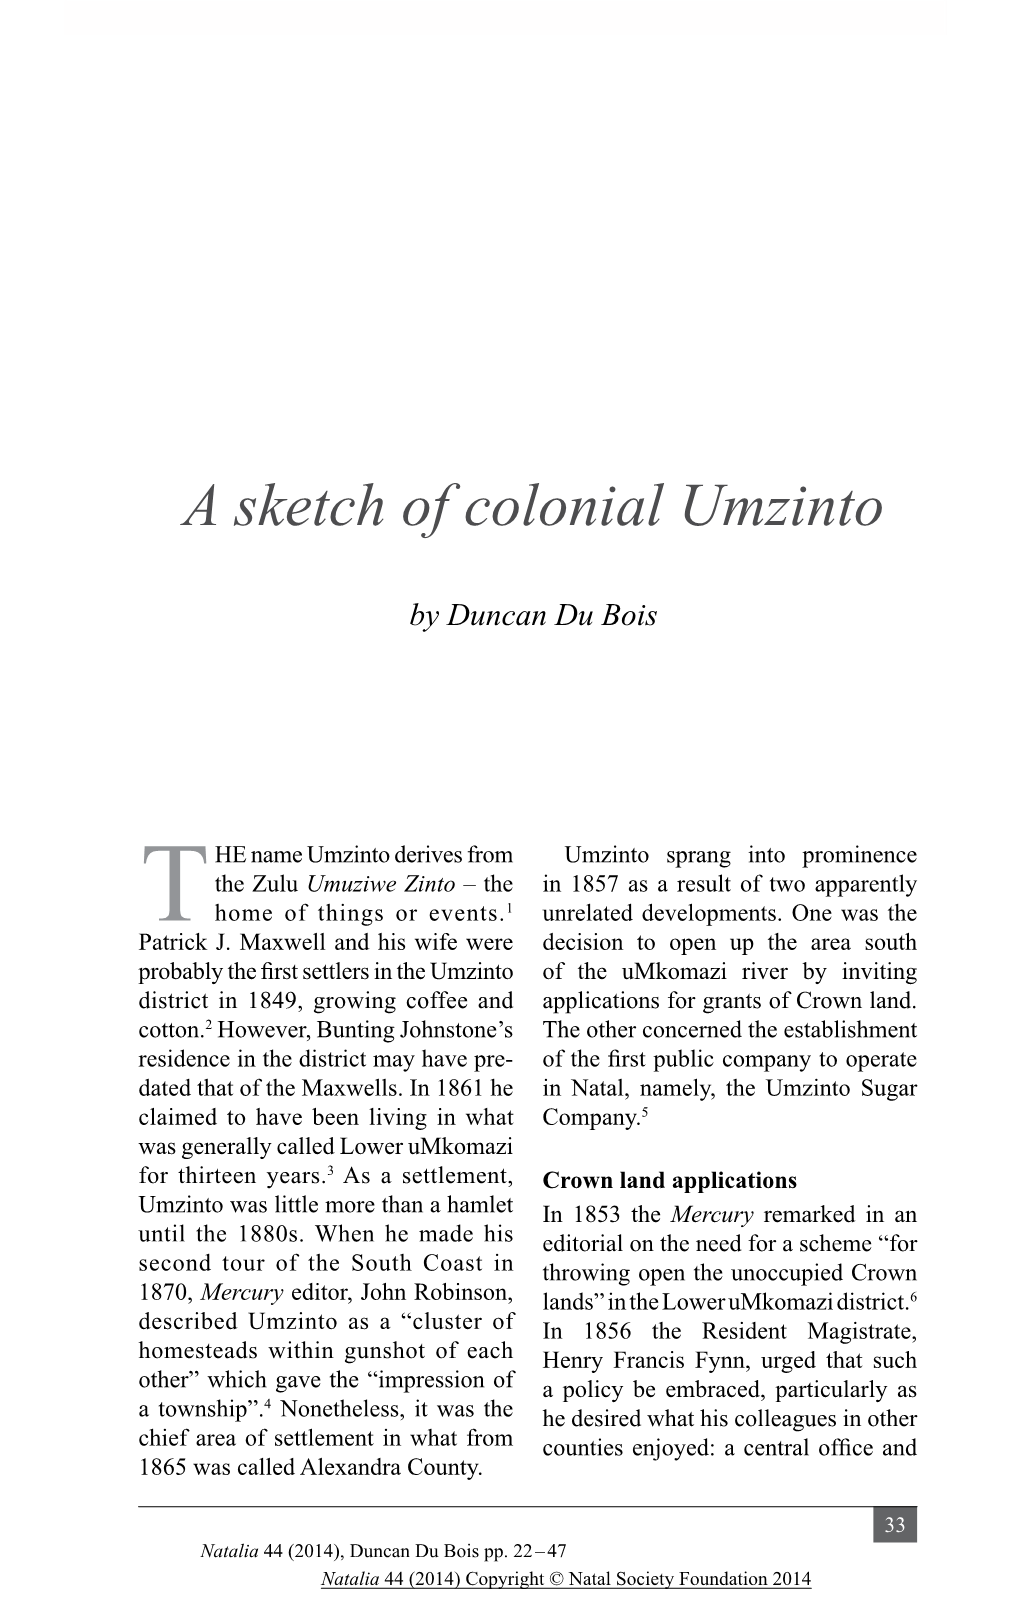 A Sketch of Colonial Umzinto